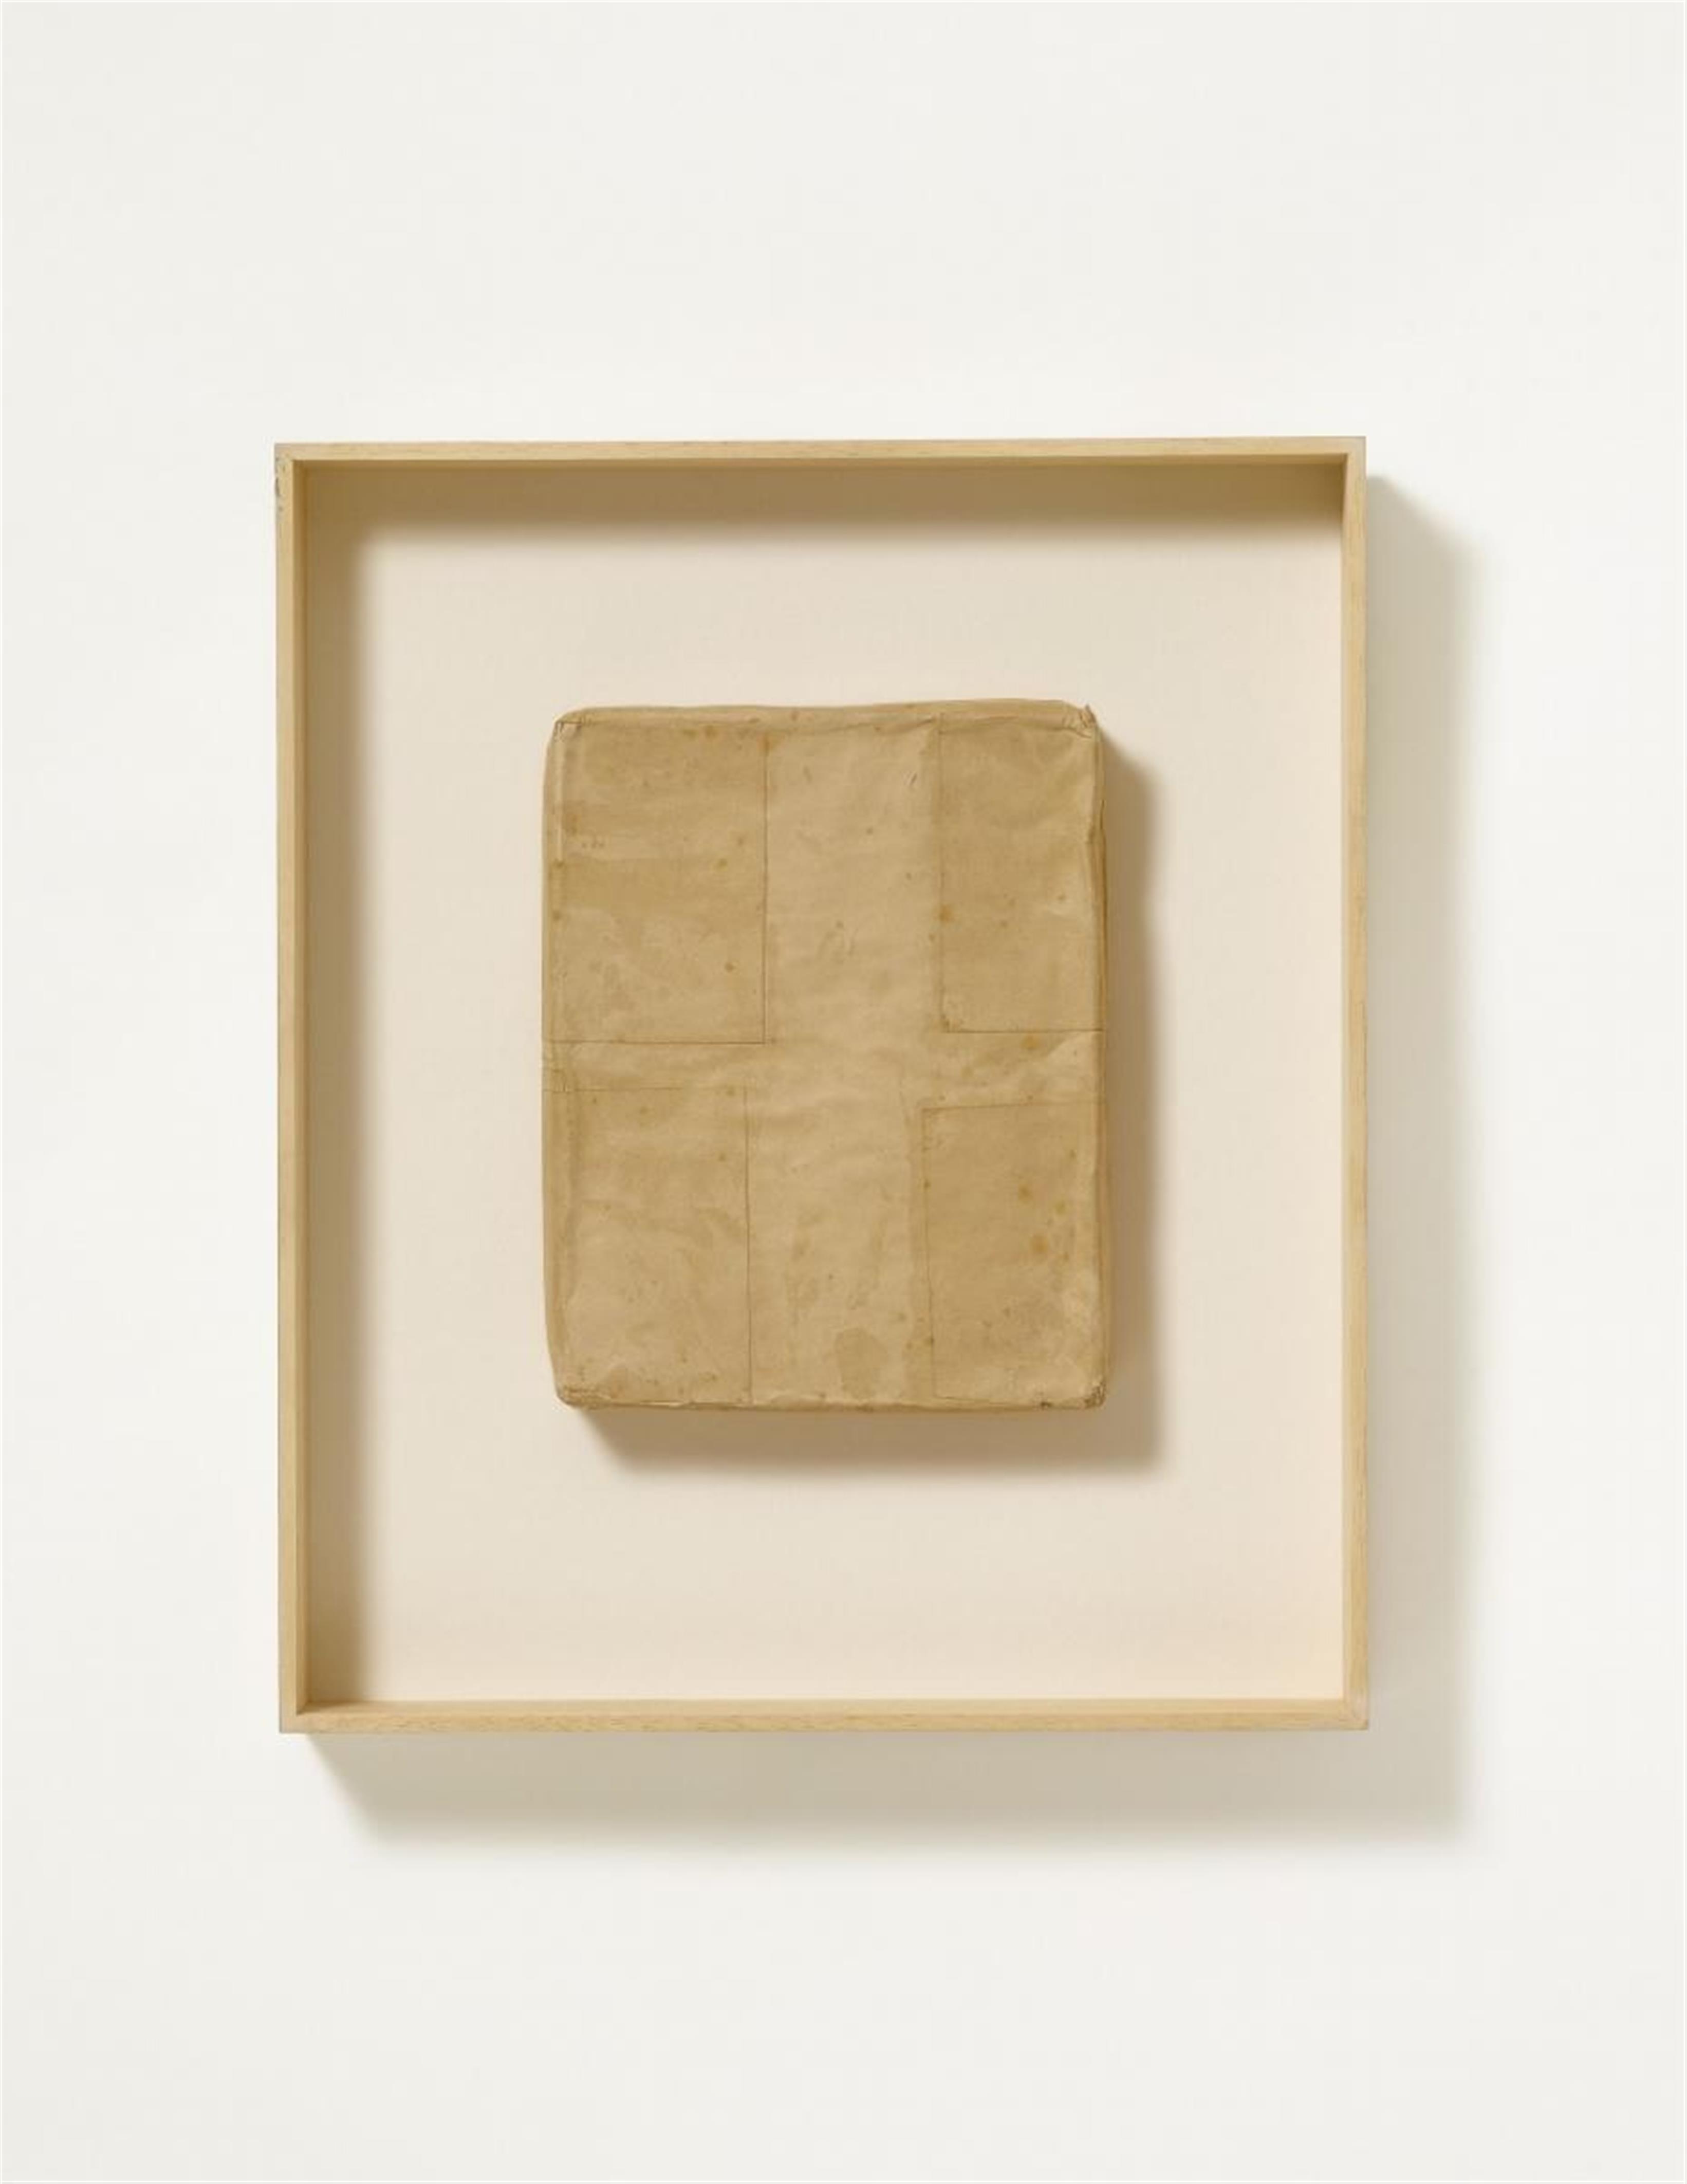 Franz Erhard Walther - Untitled (Sealed box) - image-1